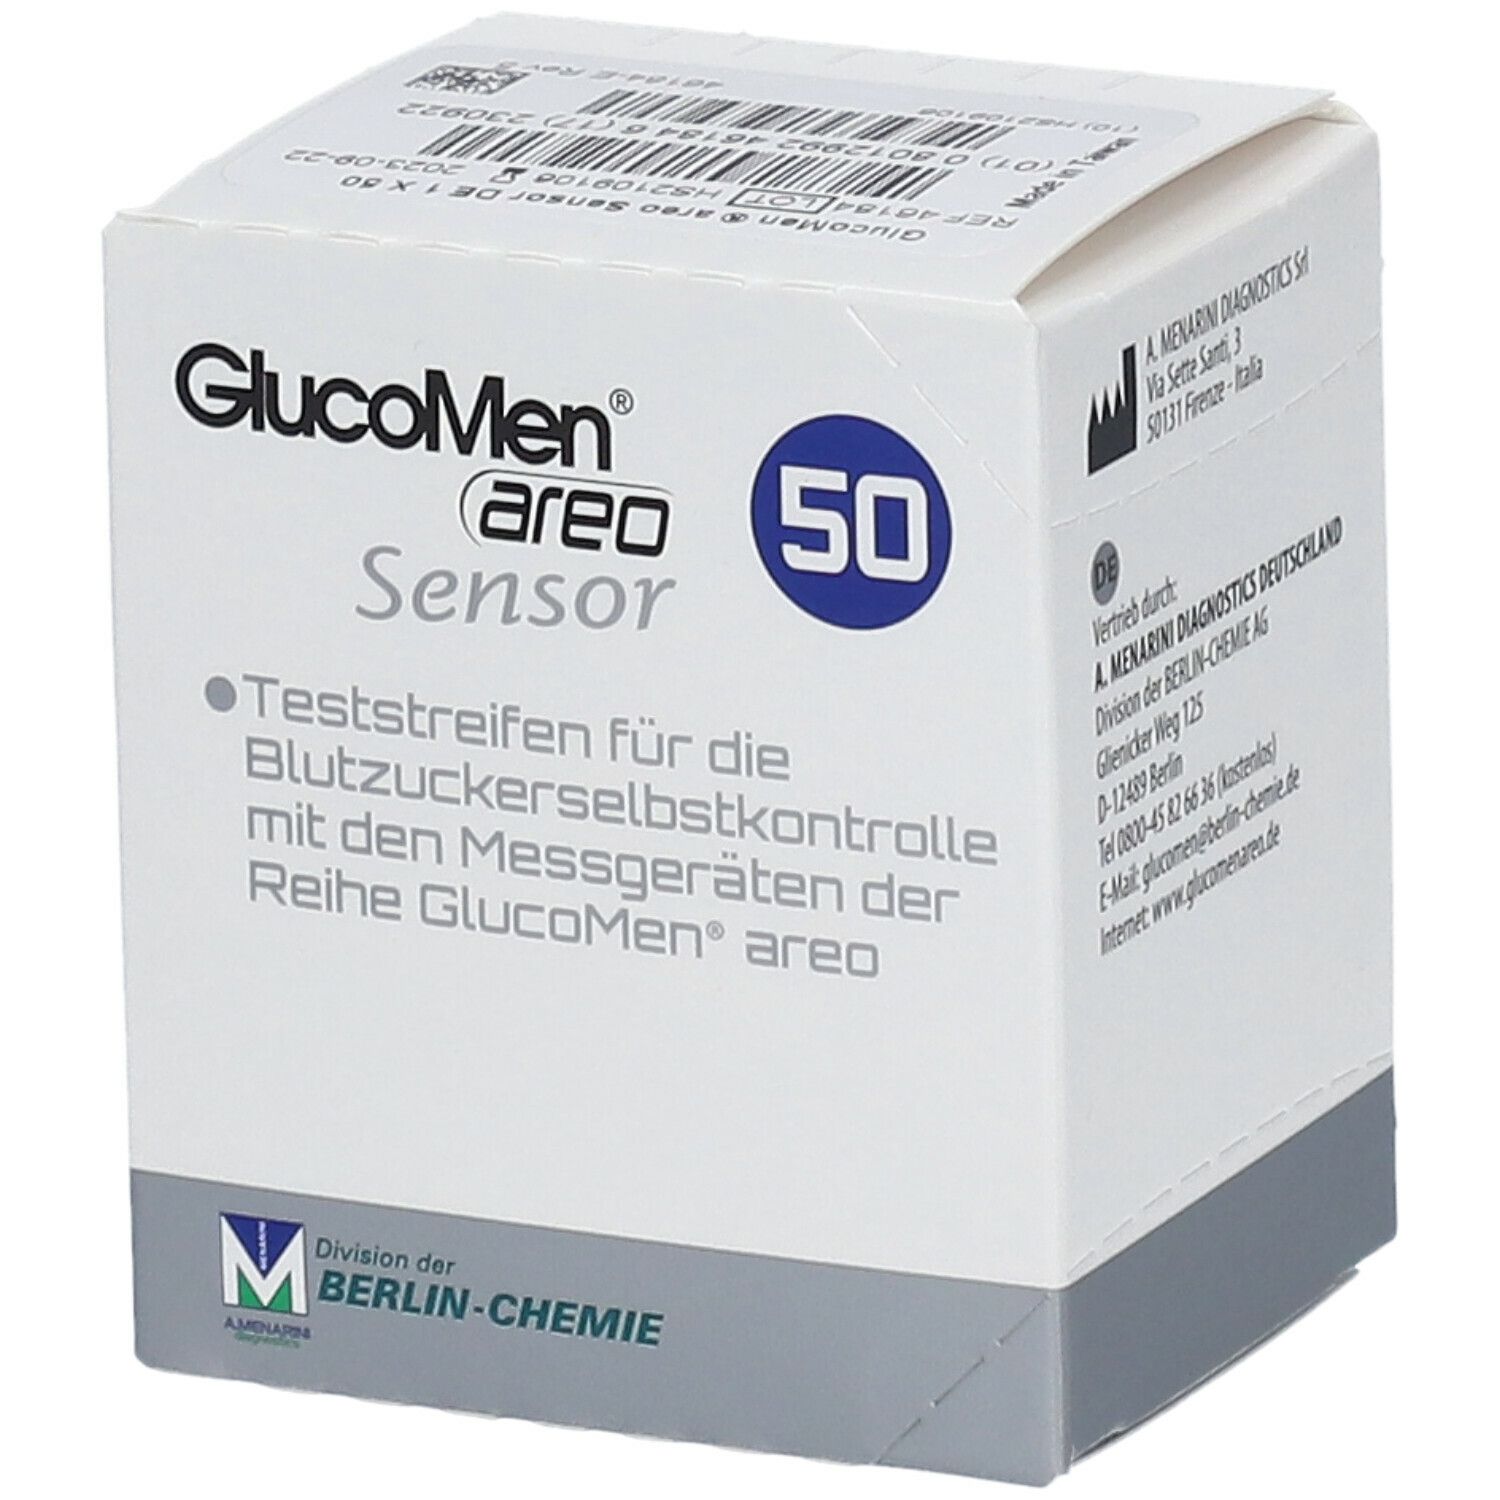 GlucoMen® areo Sensor Teststreifen